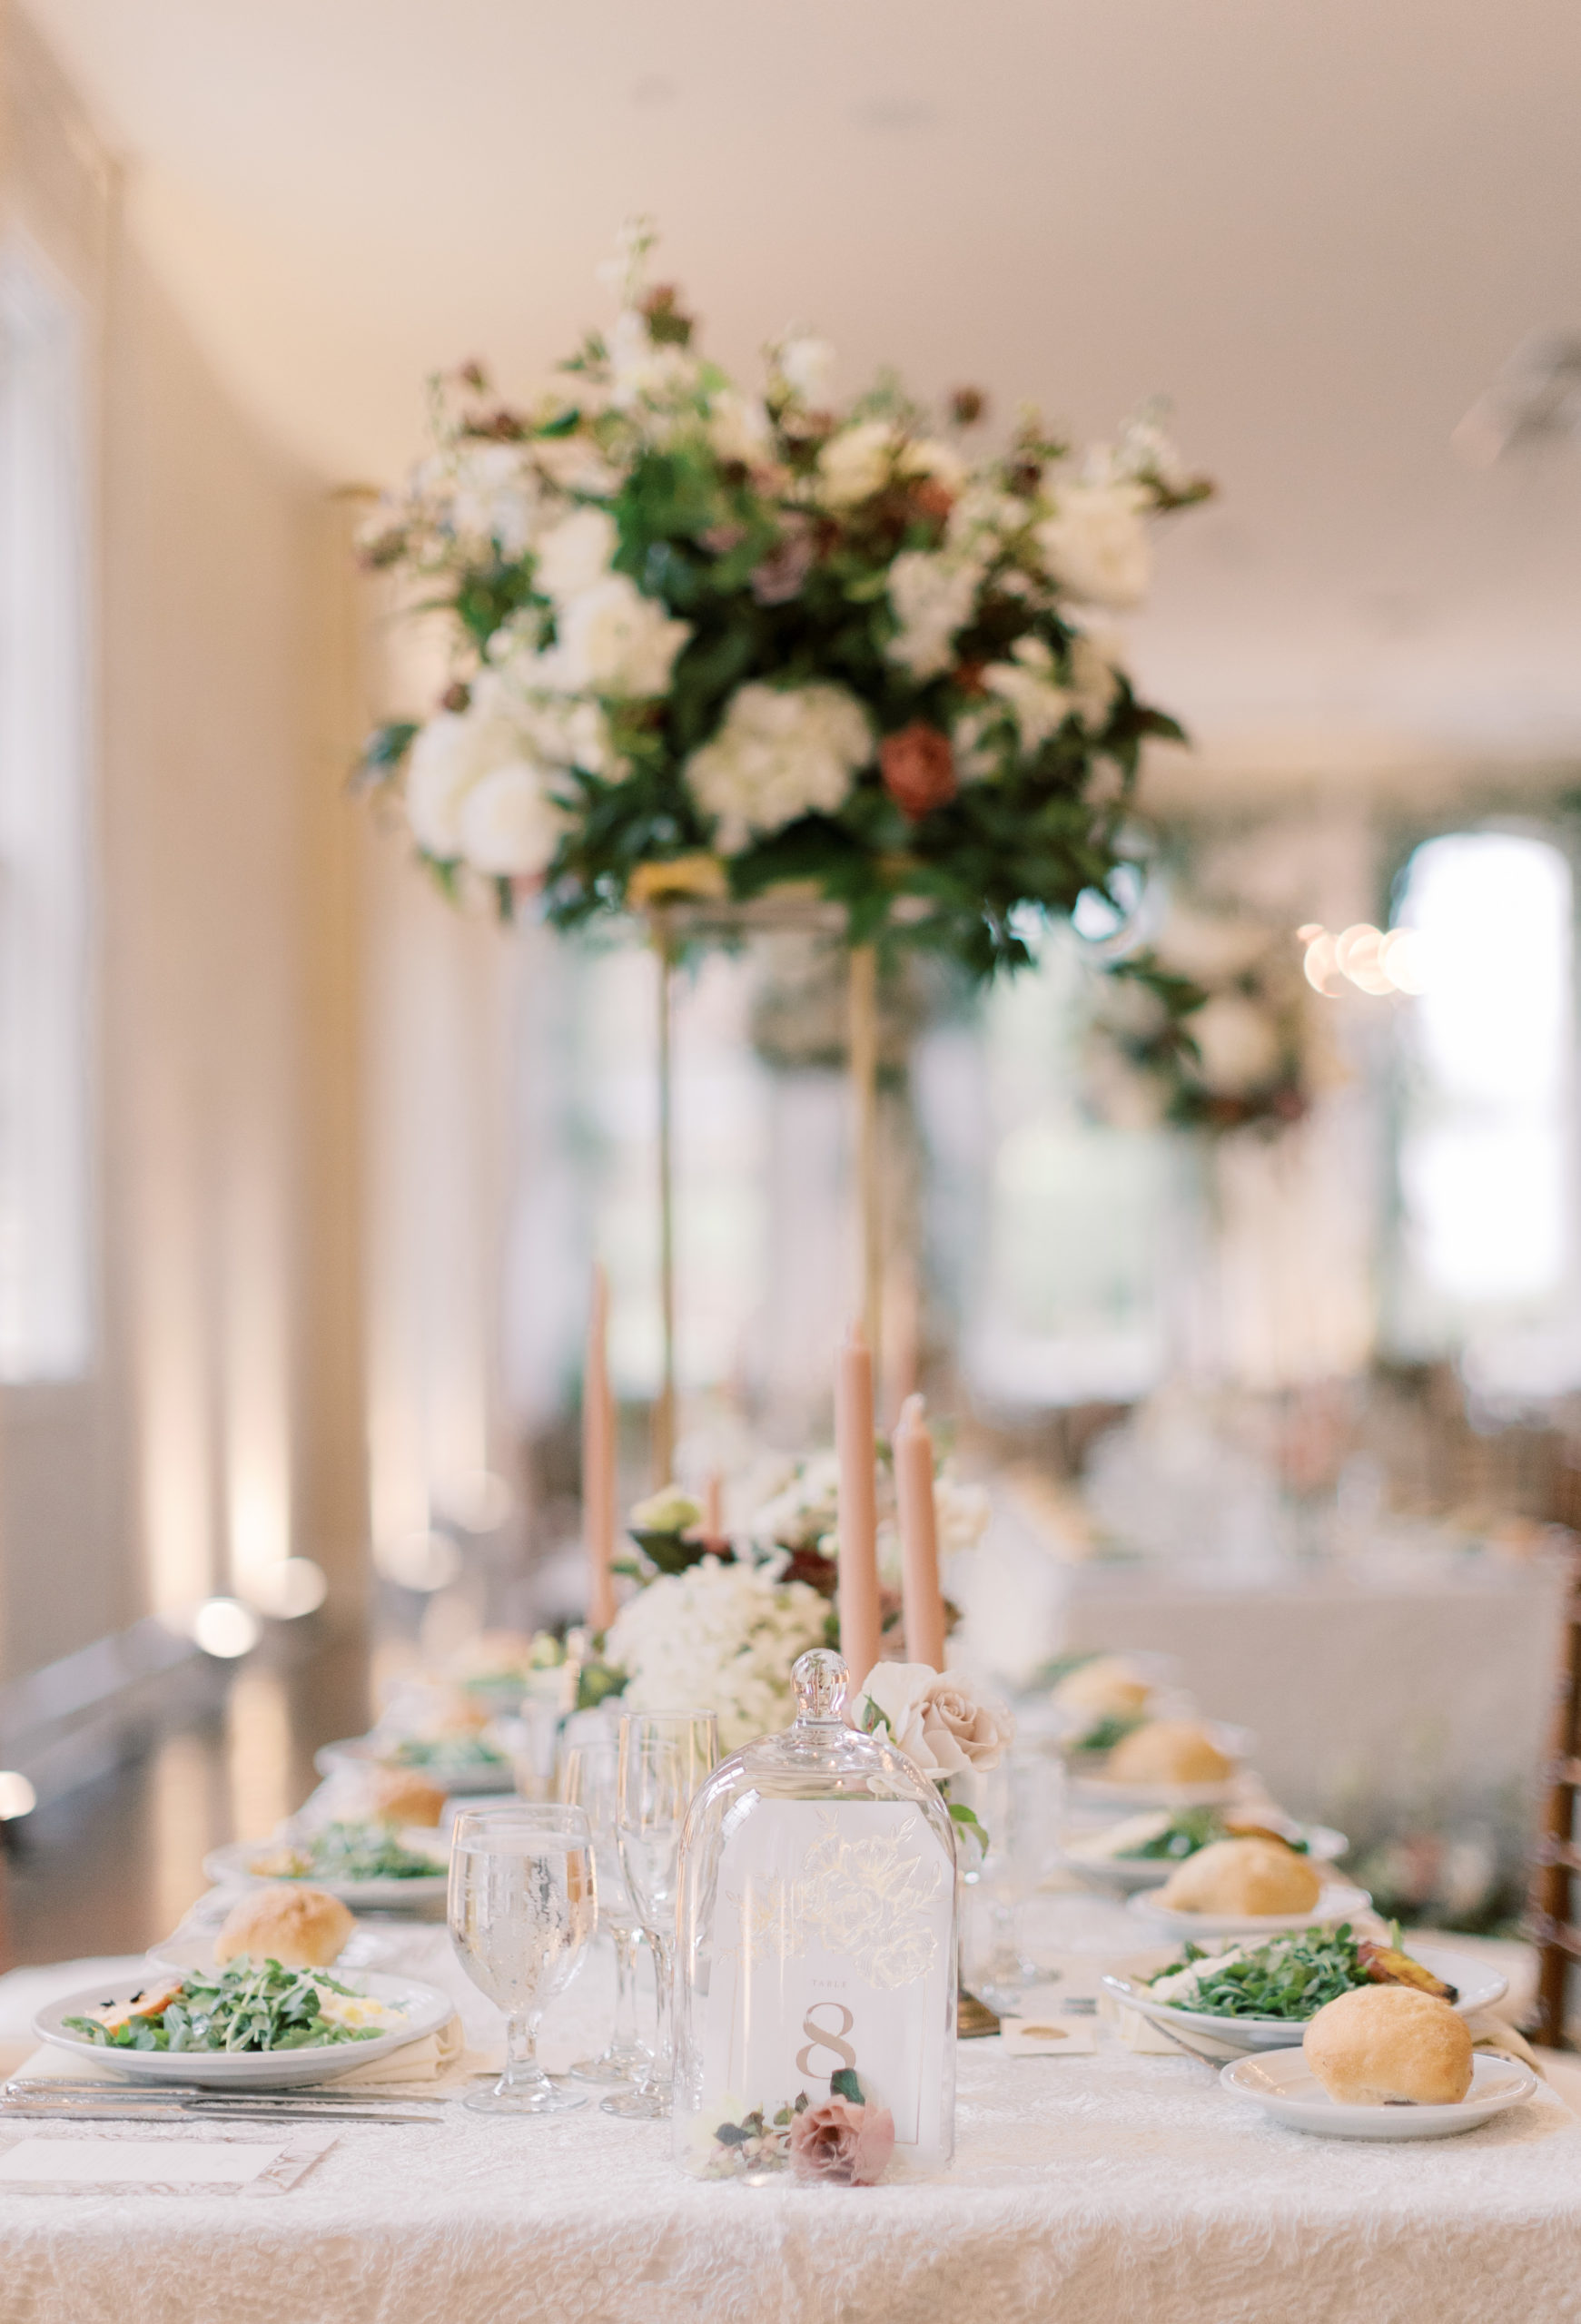 Table decor at wedding reception